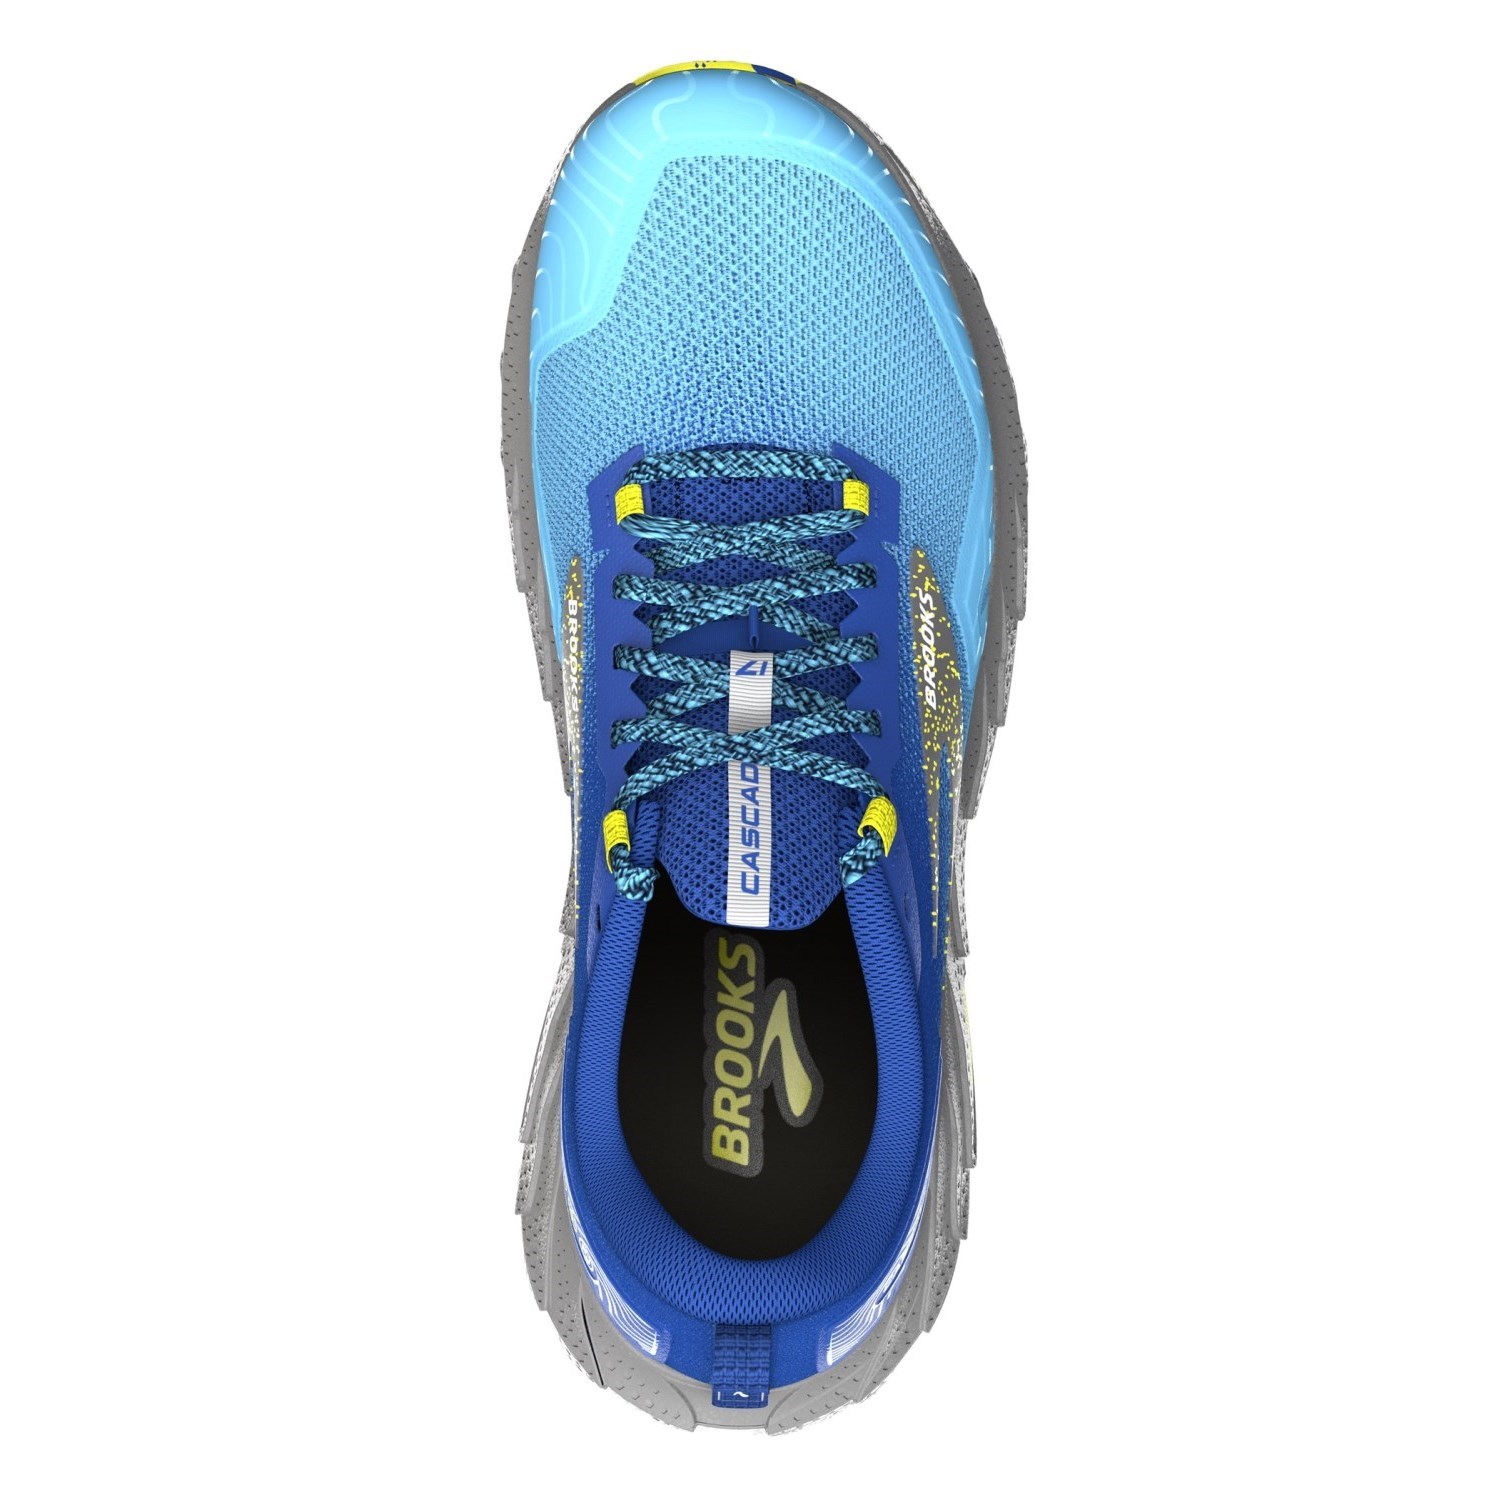 Brooks Cascadia 17 - Mens Trail Running Shoes - Blue/Surf/Sulphur ...